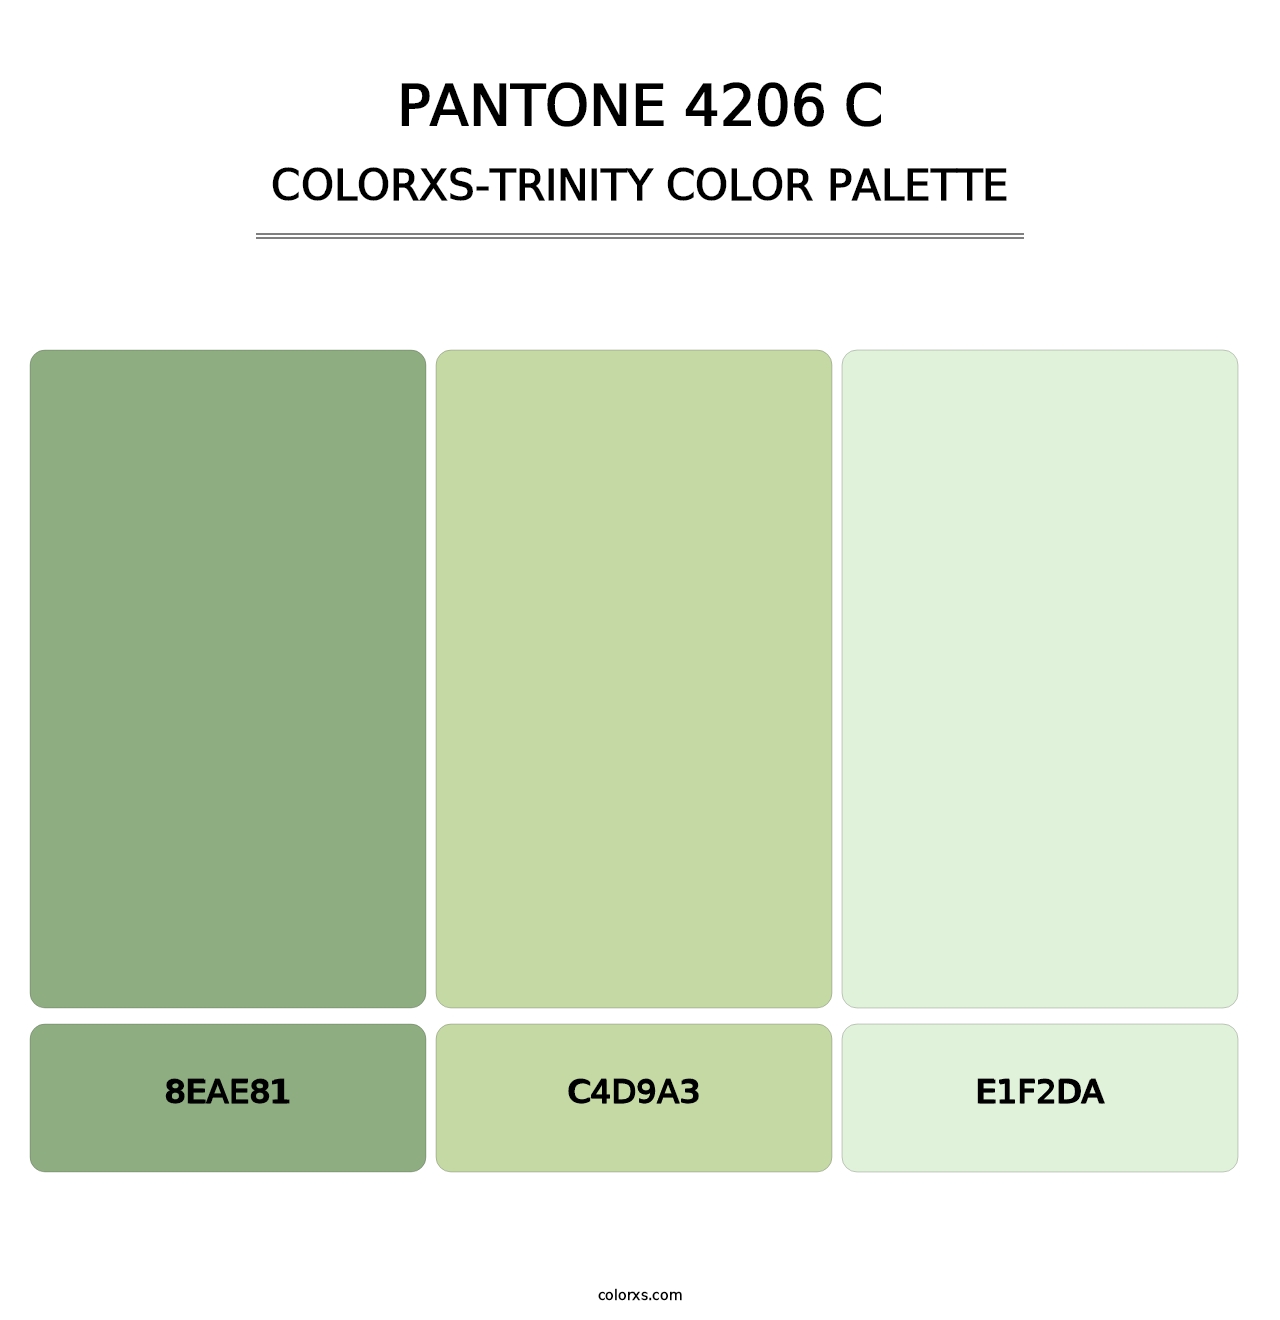 PANTONE 4206 C - Colorxs Trinity Palette